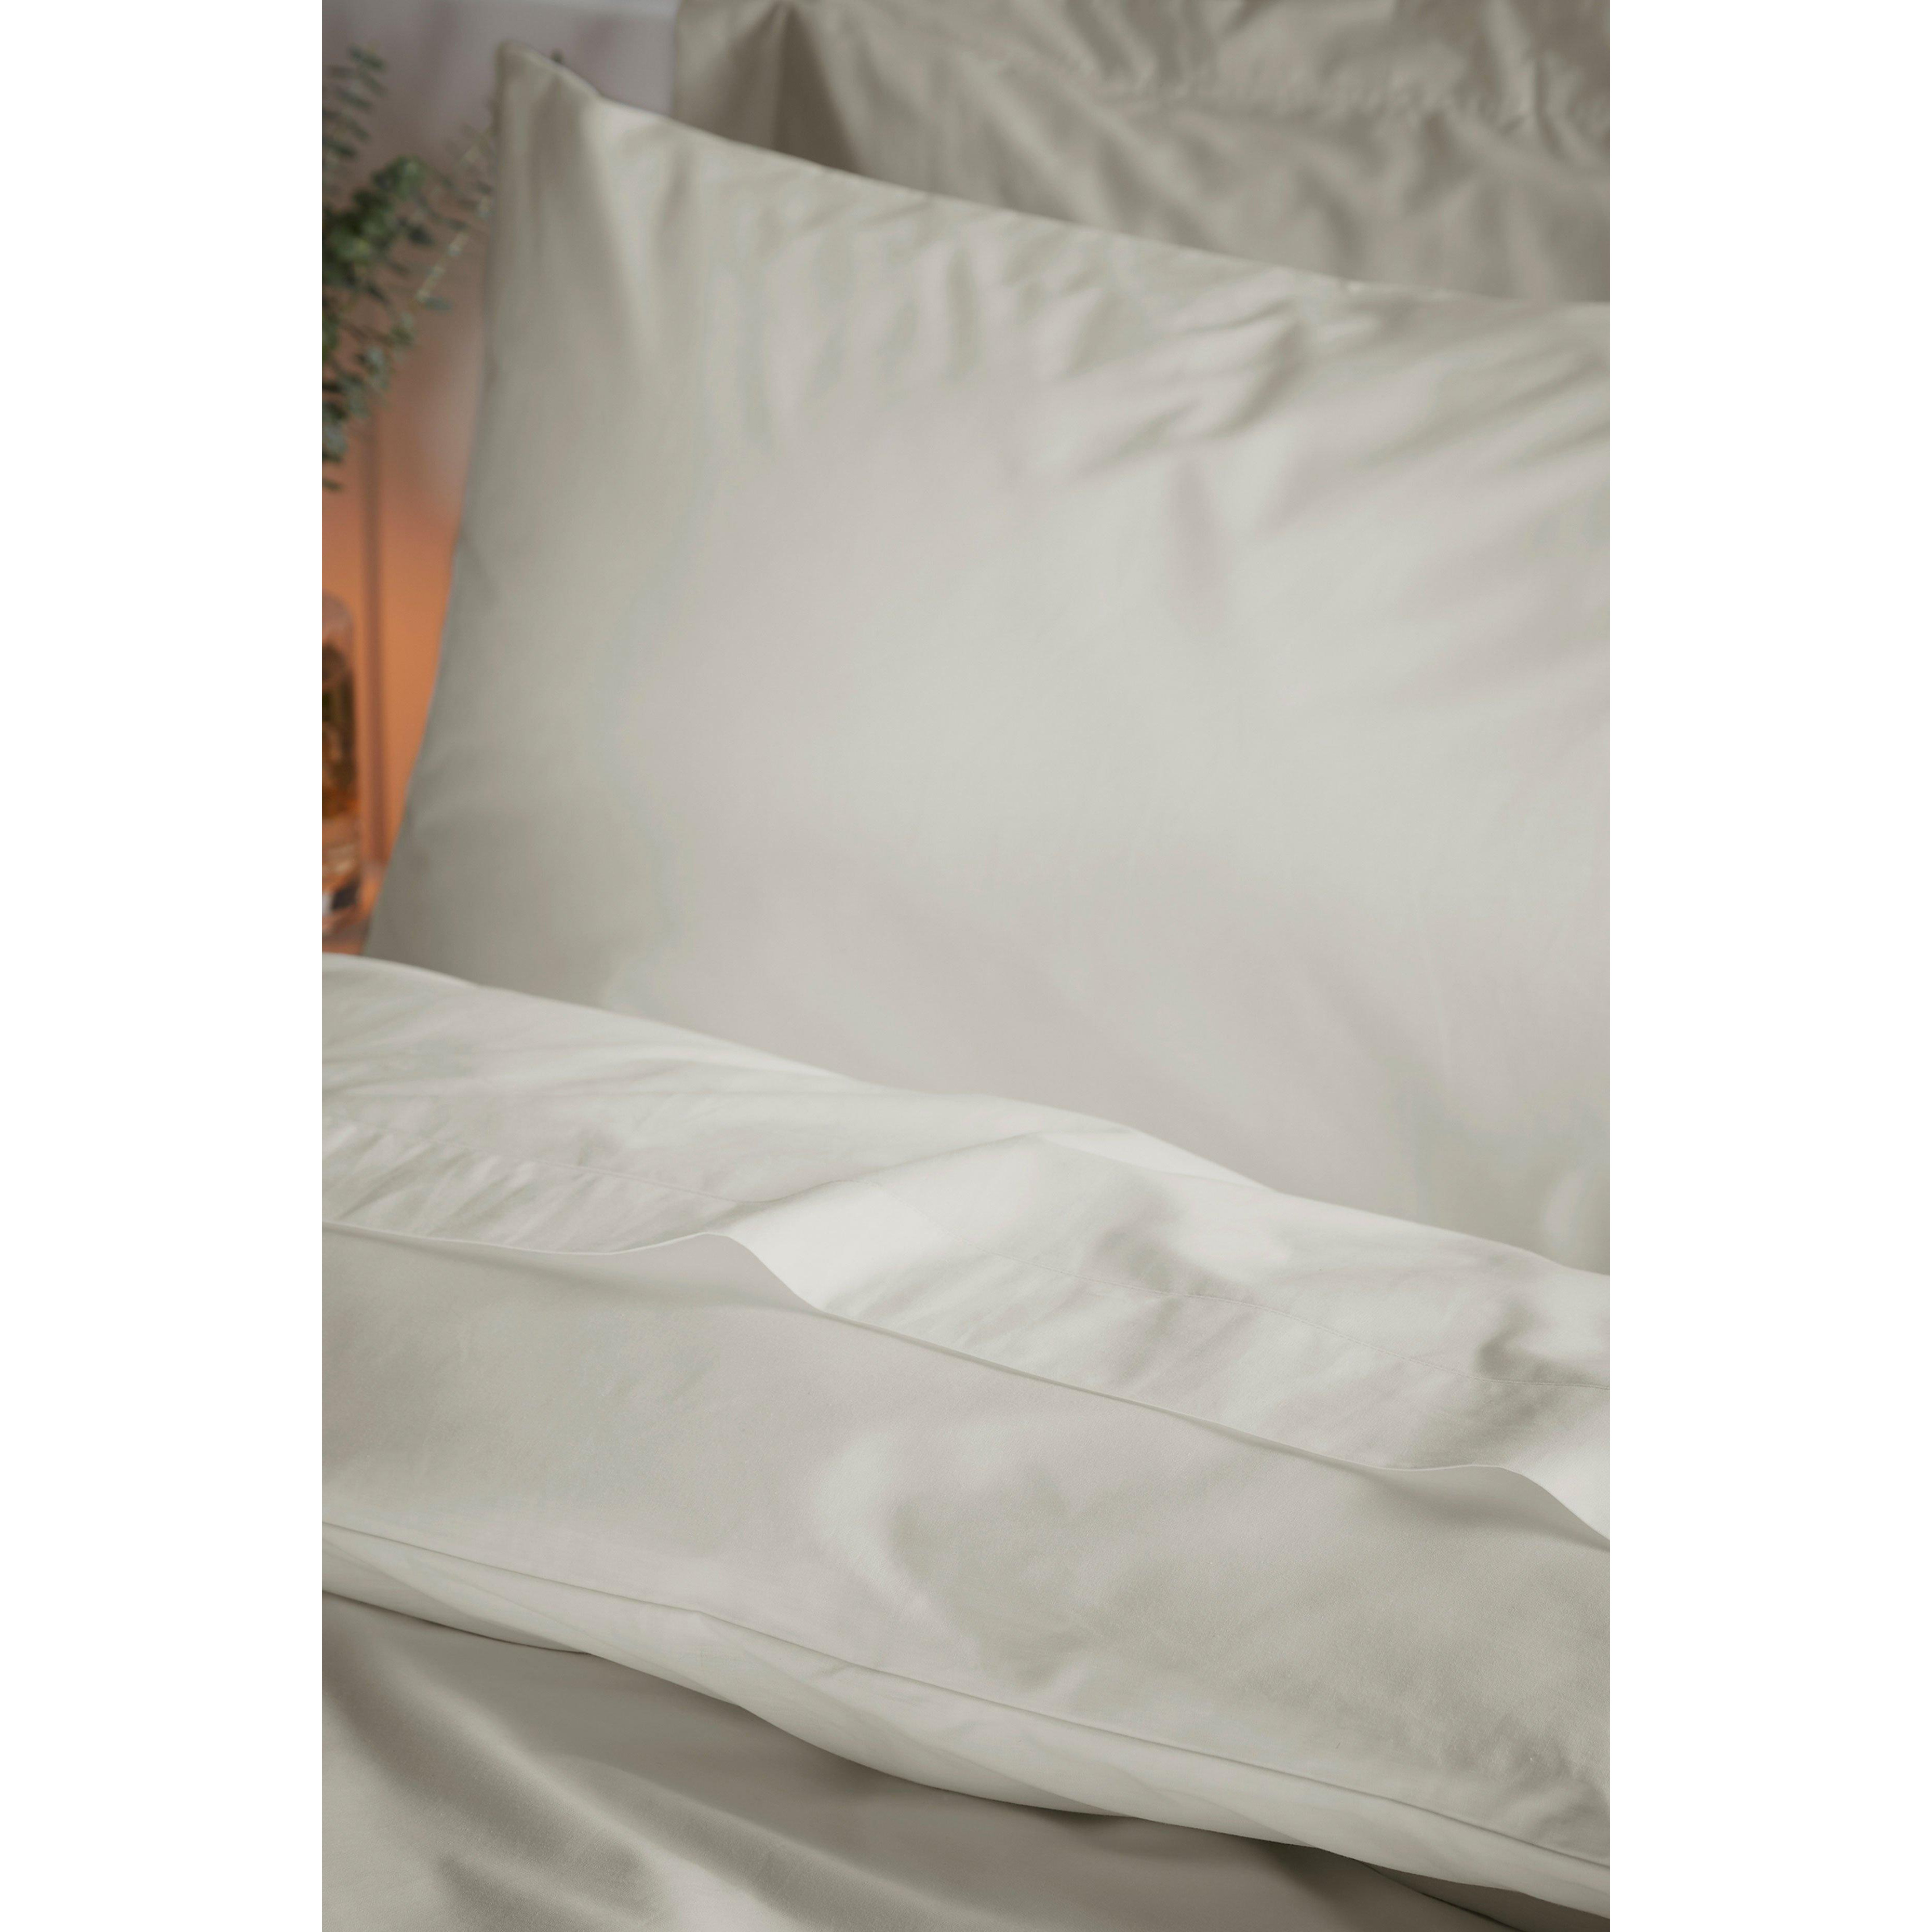 'Temperature Controlling TENCEL Lyocell' Pillowcase Pair - image 1